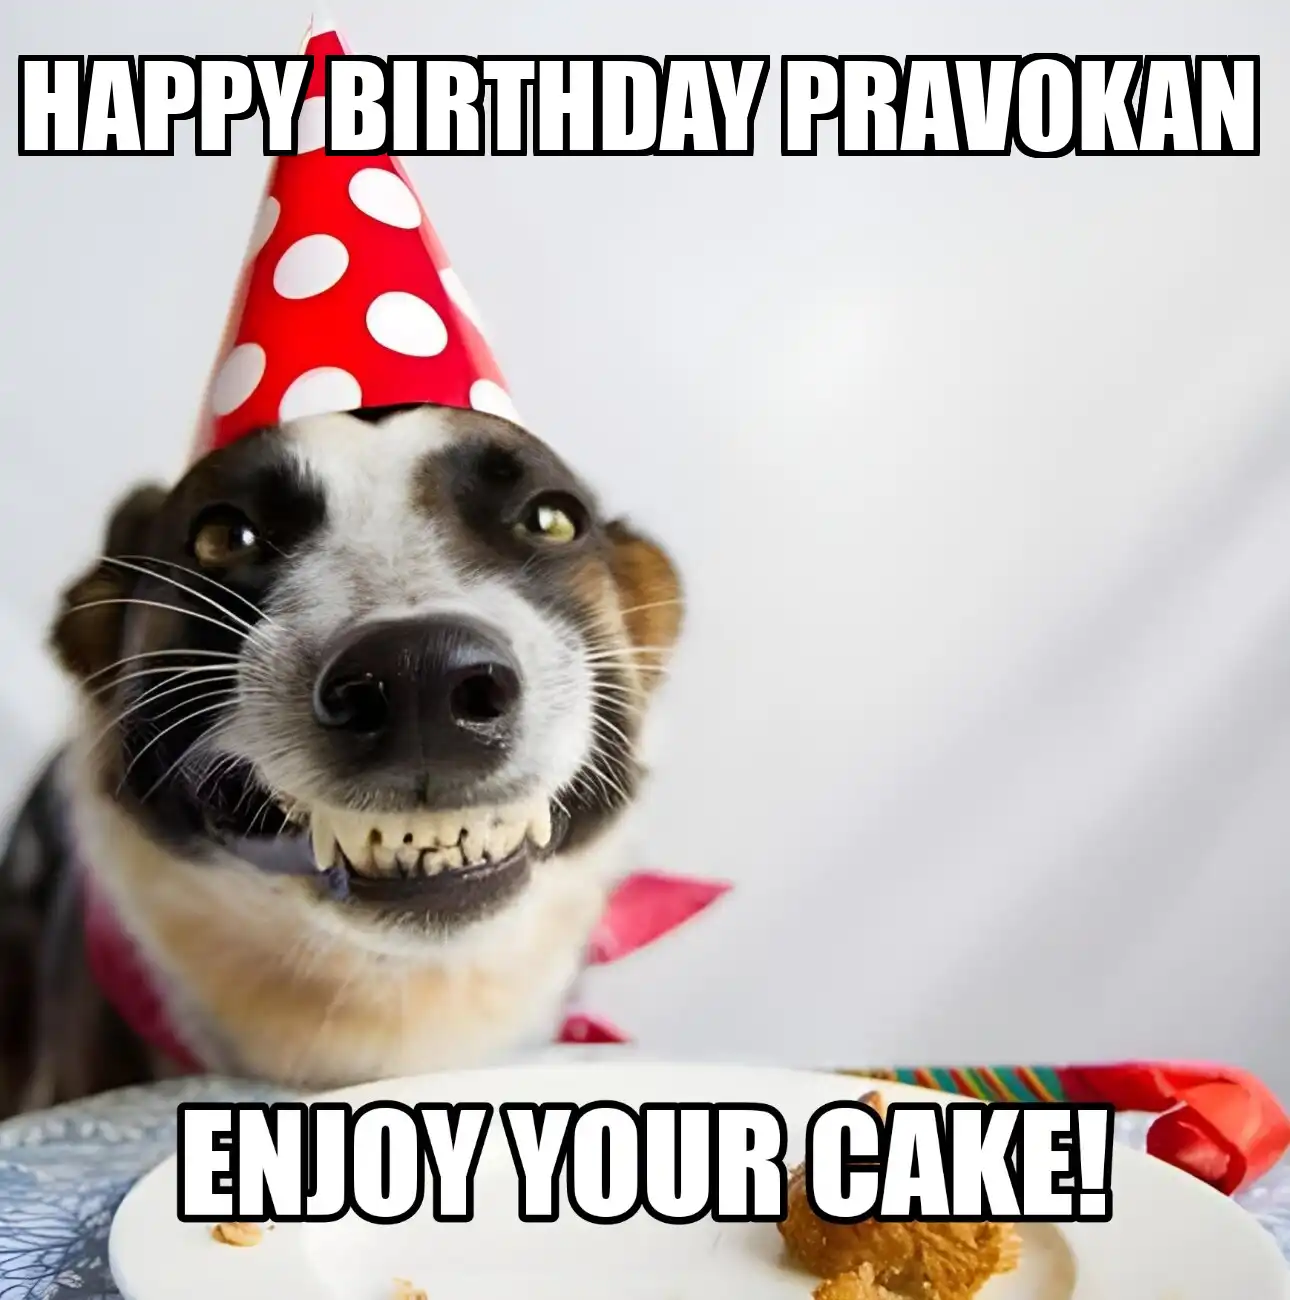 Happy Birthday Pravokan Enjoy Your Cake Dog Meme